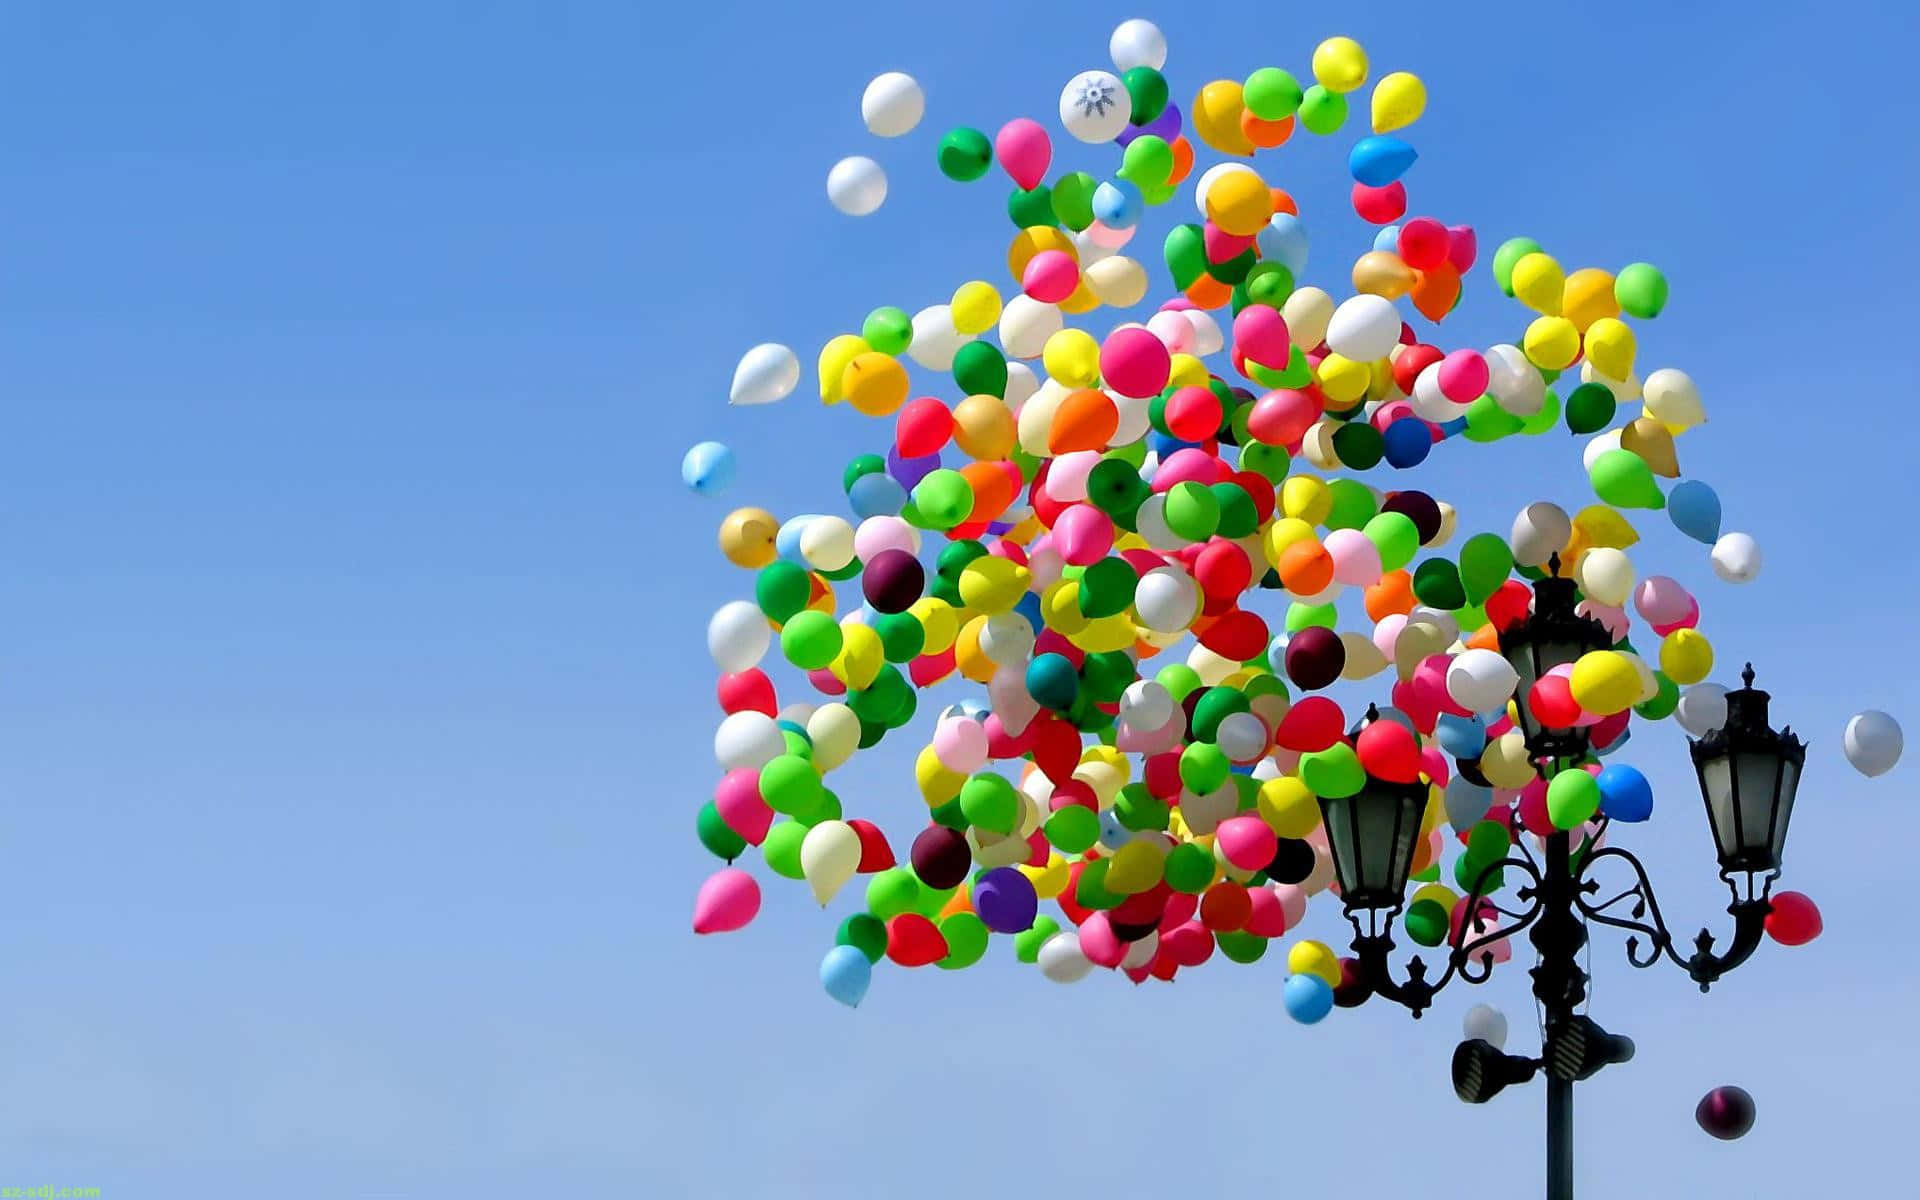 Hintergrundmit Luftballons, Luftballons An Einem Laternenpfahl Befestigt.